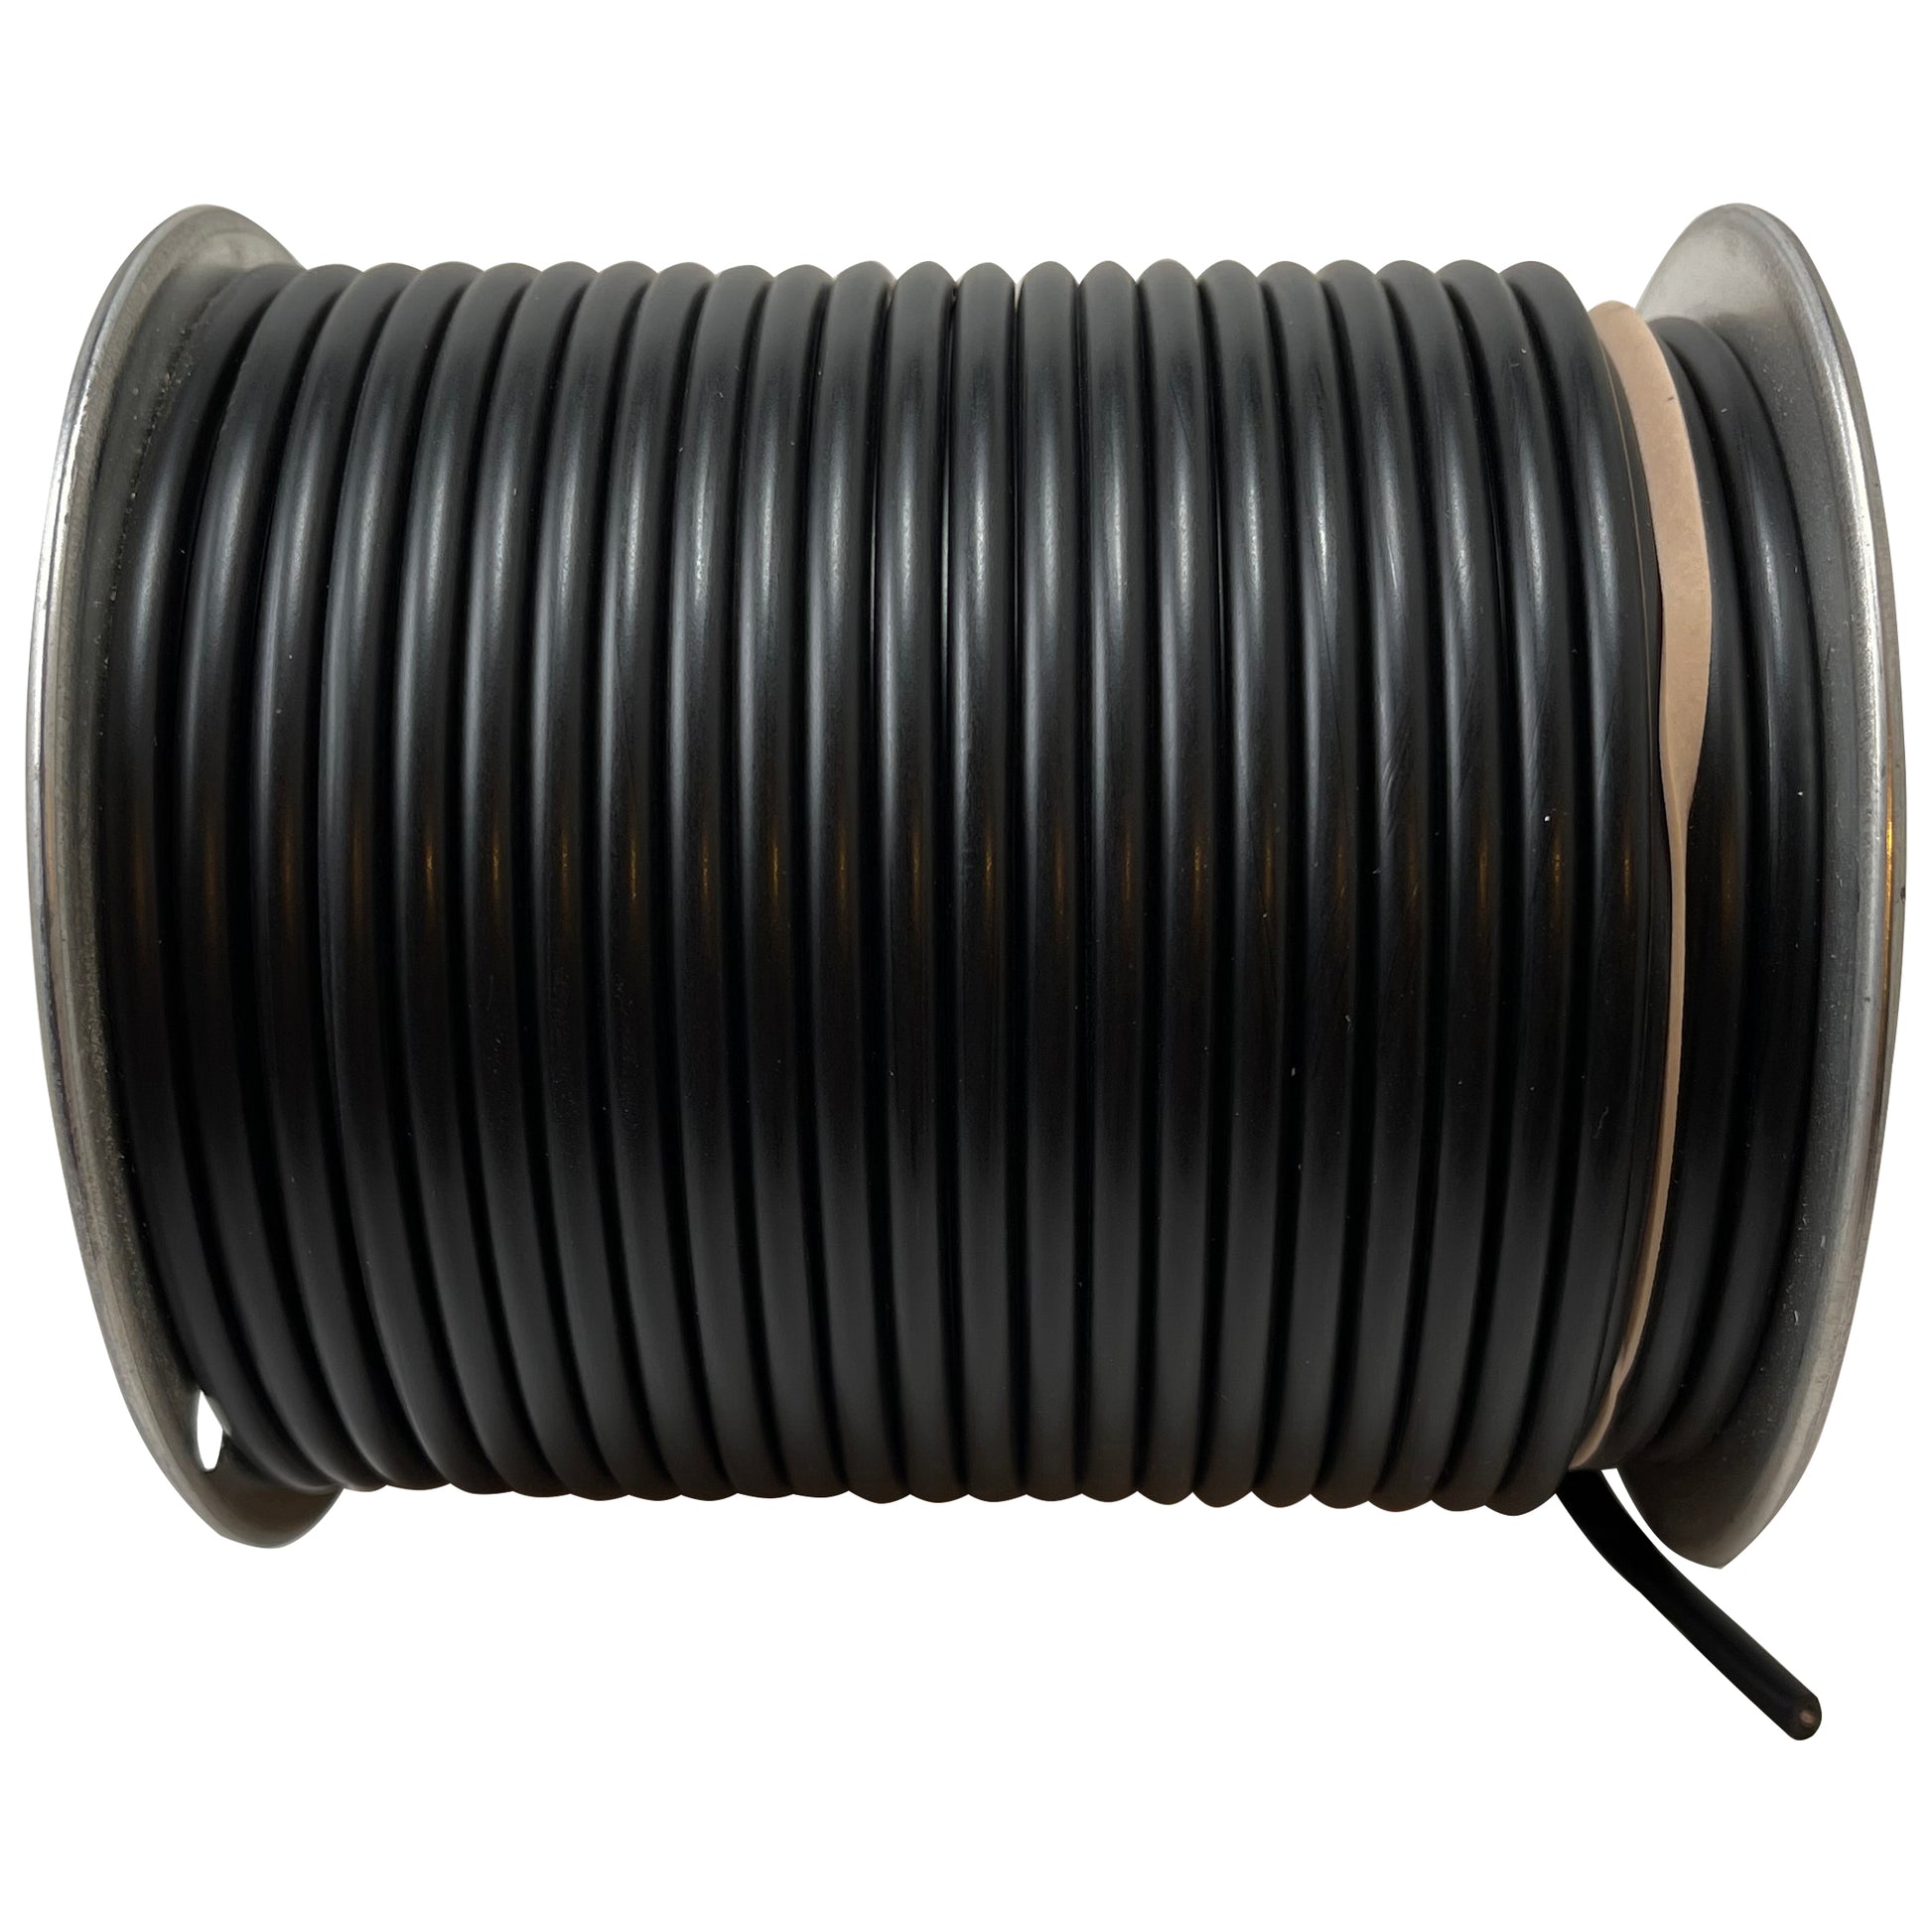 14 Gauge Universal Automotive Fusible Link Wire - 100' FT Spool